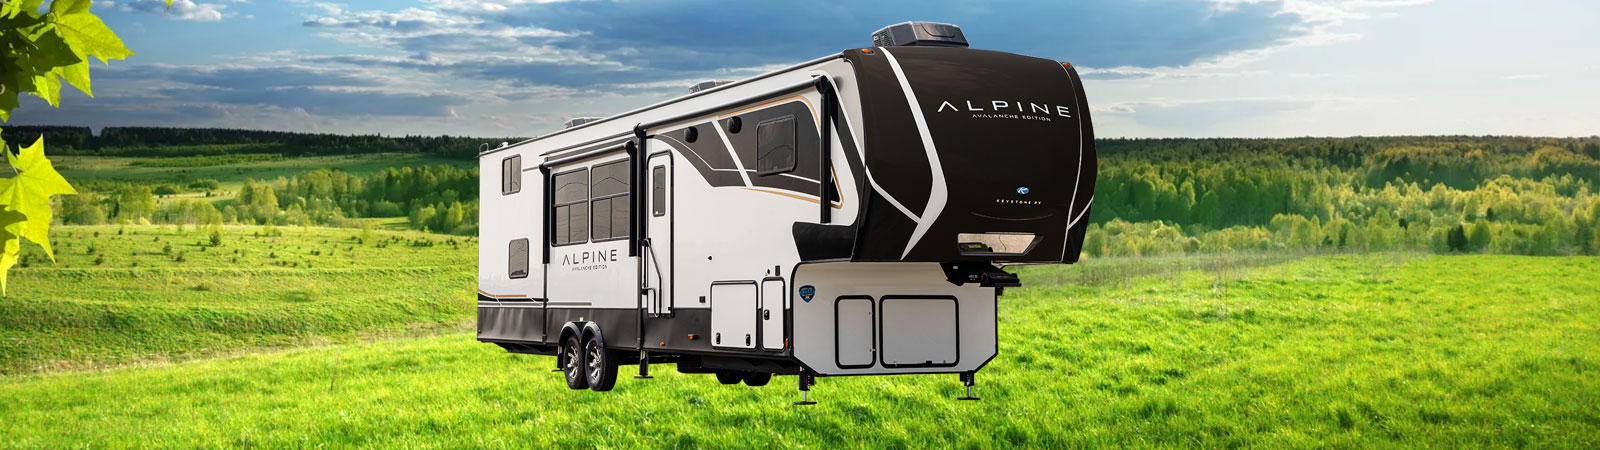 New Keystone RV Avalanche Fifth Wheel for Sale in Beloit Kansas USA